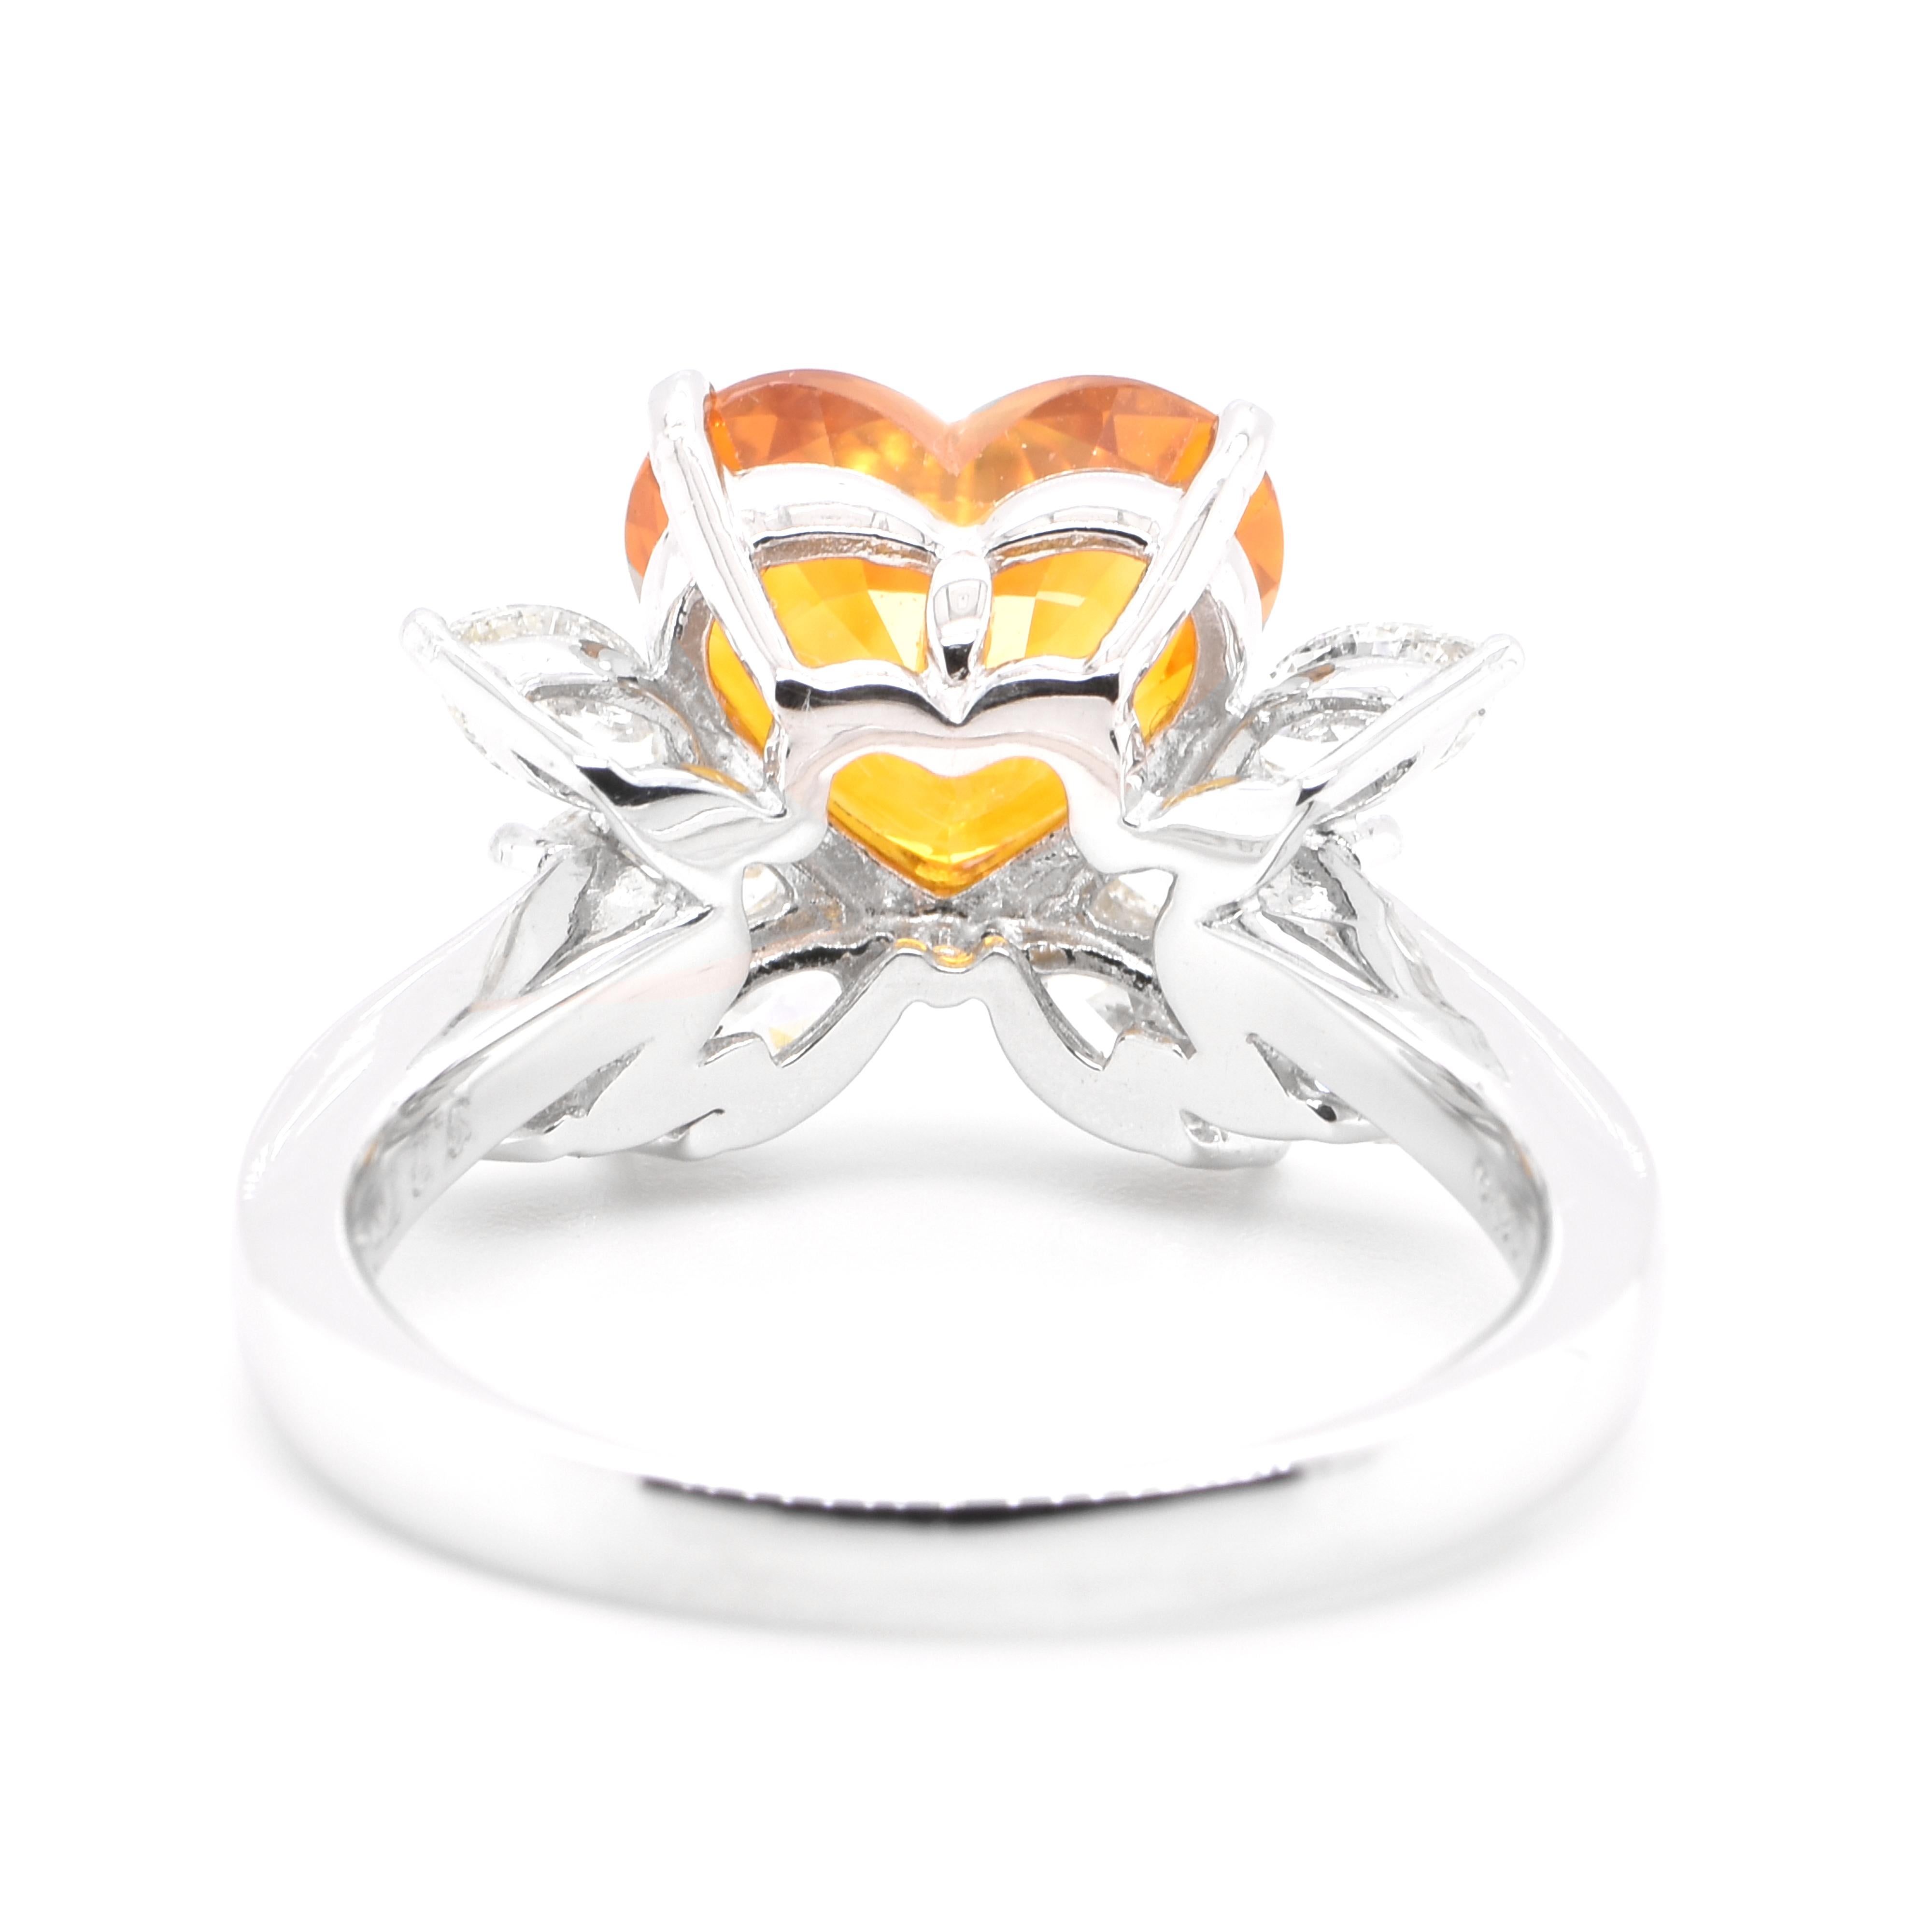 Women's 3.27 Carat Natural Heart-Cut Golden Sapphire and Diamond Ring Set in Platinum